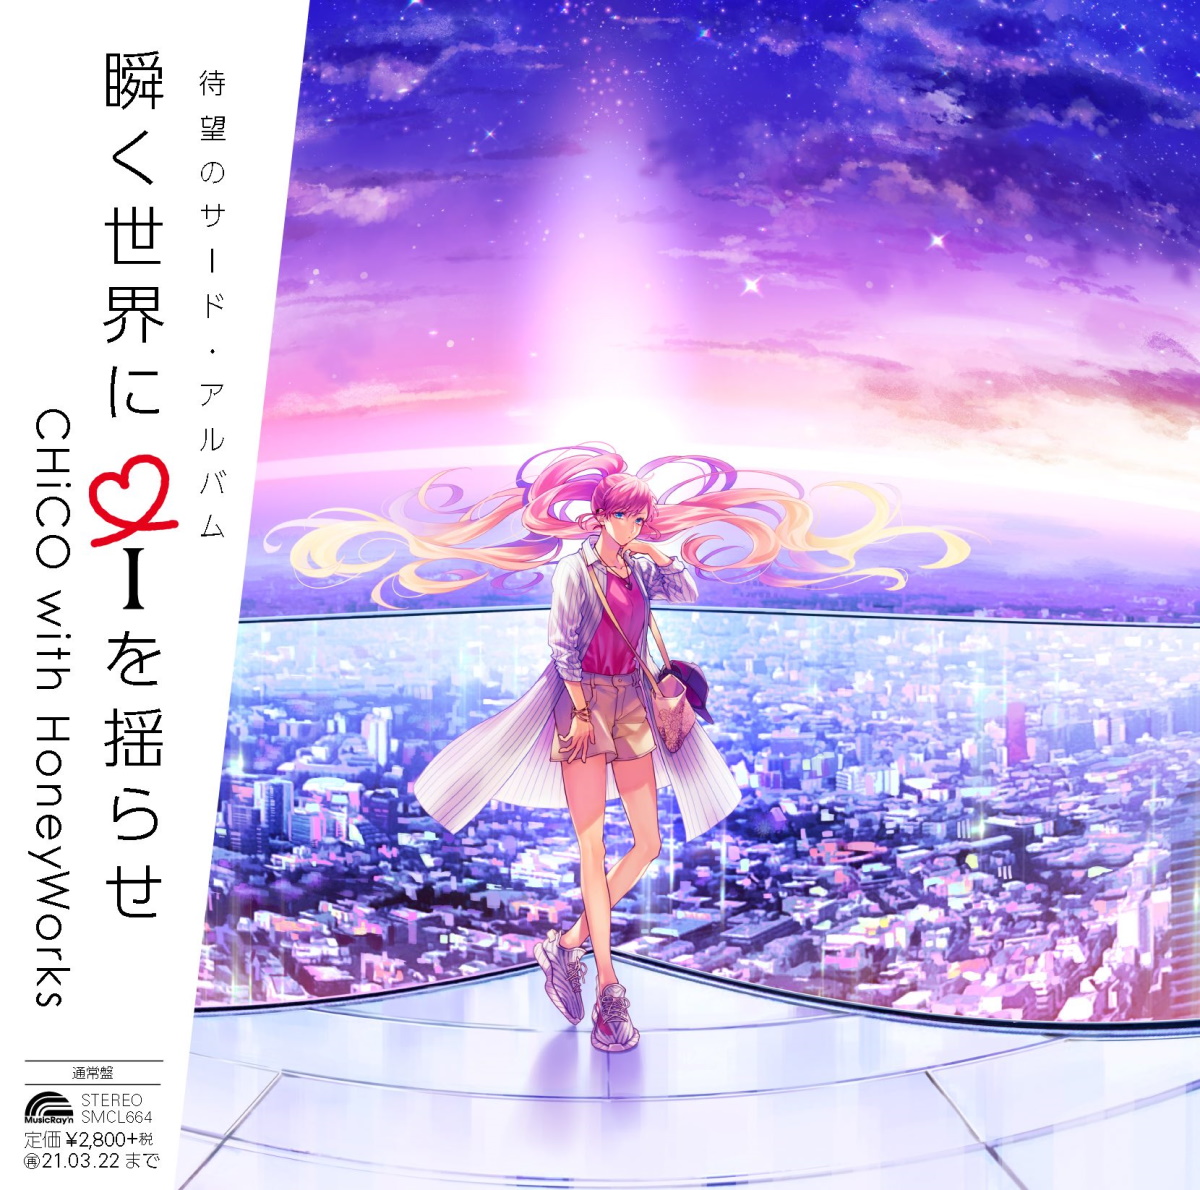 Cover for『CHiCO with HoneyWorks - Watashi no Tenshi』from the release『Matataku Sekai ni i wo Yurase』